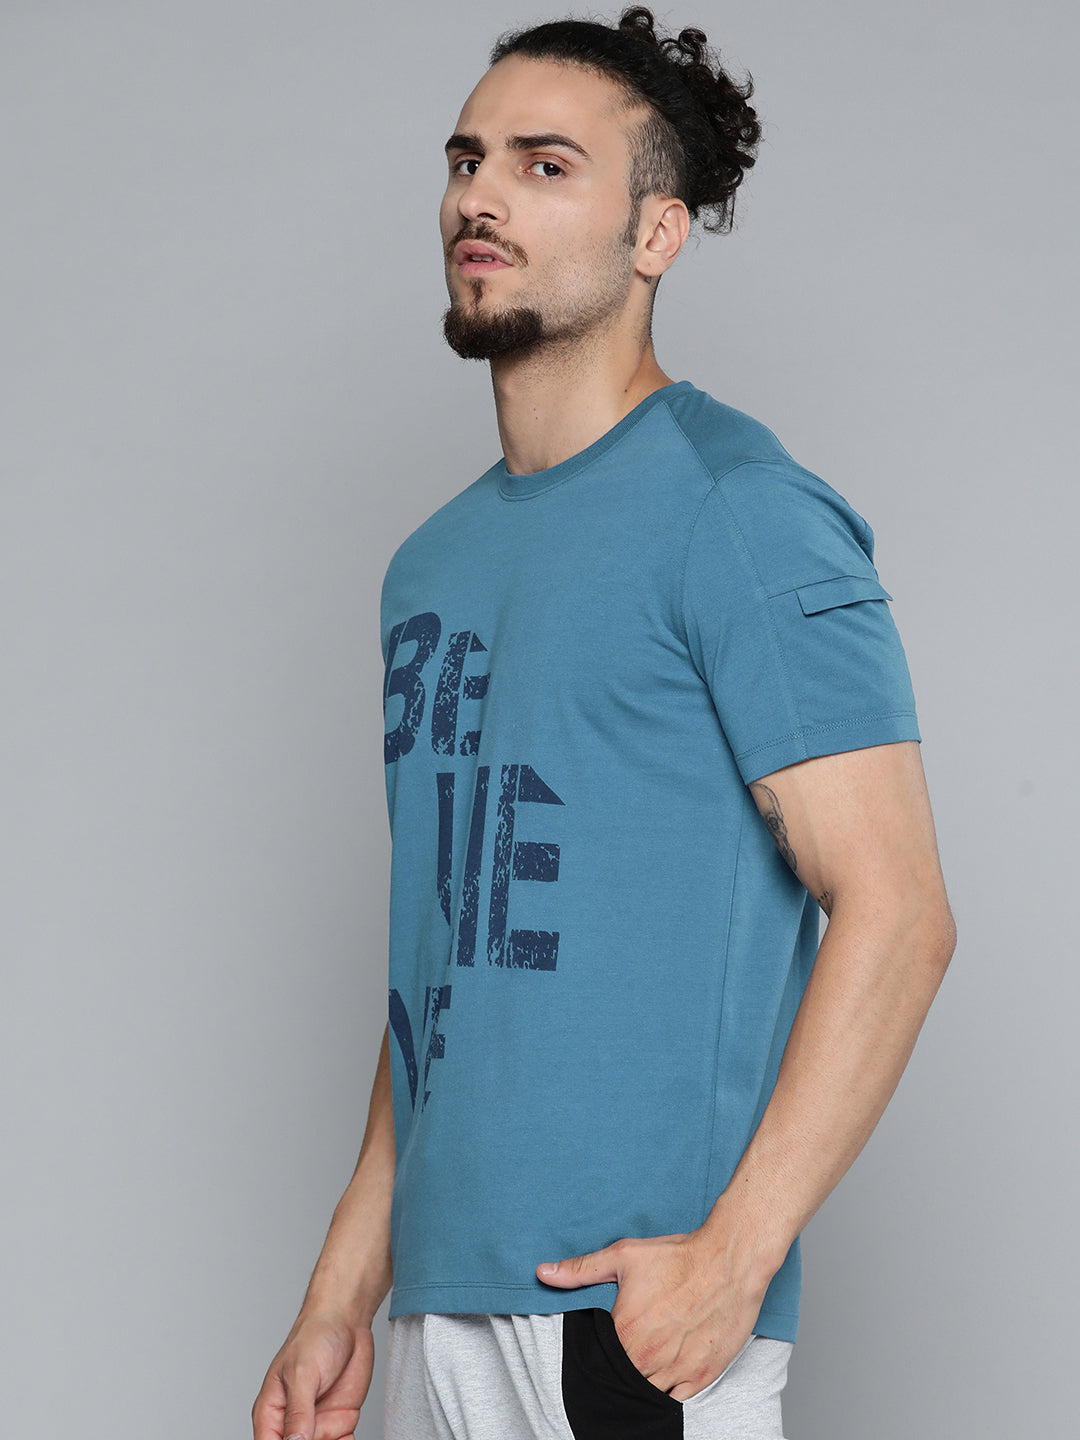 Alcis Men Teal Blue Typography Printed Slim Fit Gym T-shirt